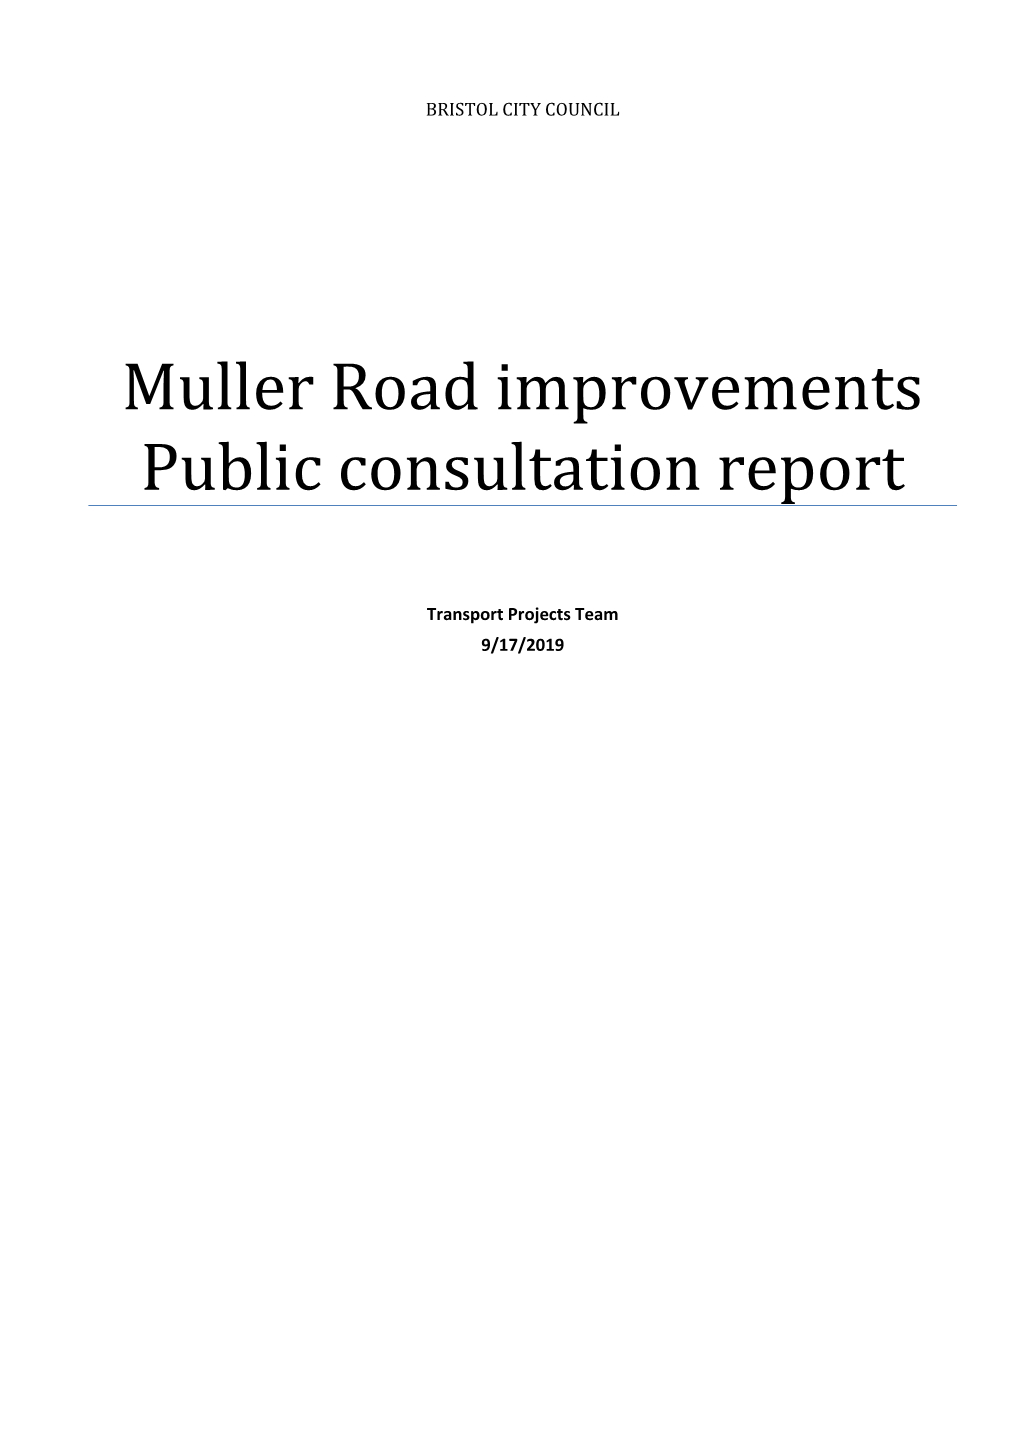 Muller Road Improvements Public Consultation Report